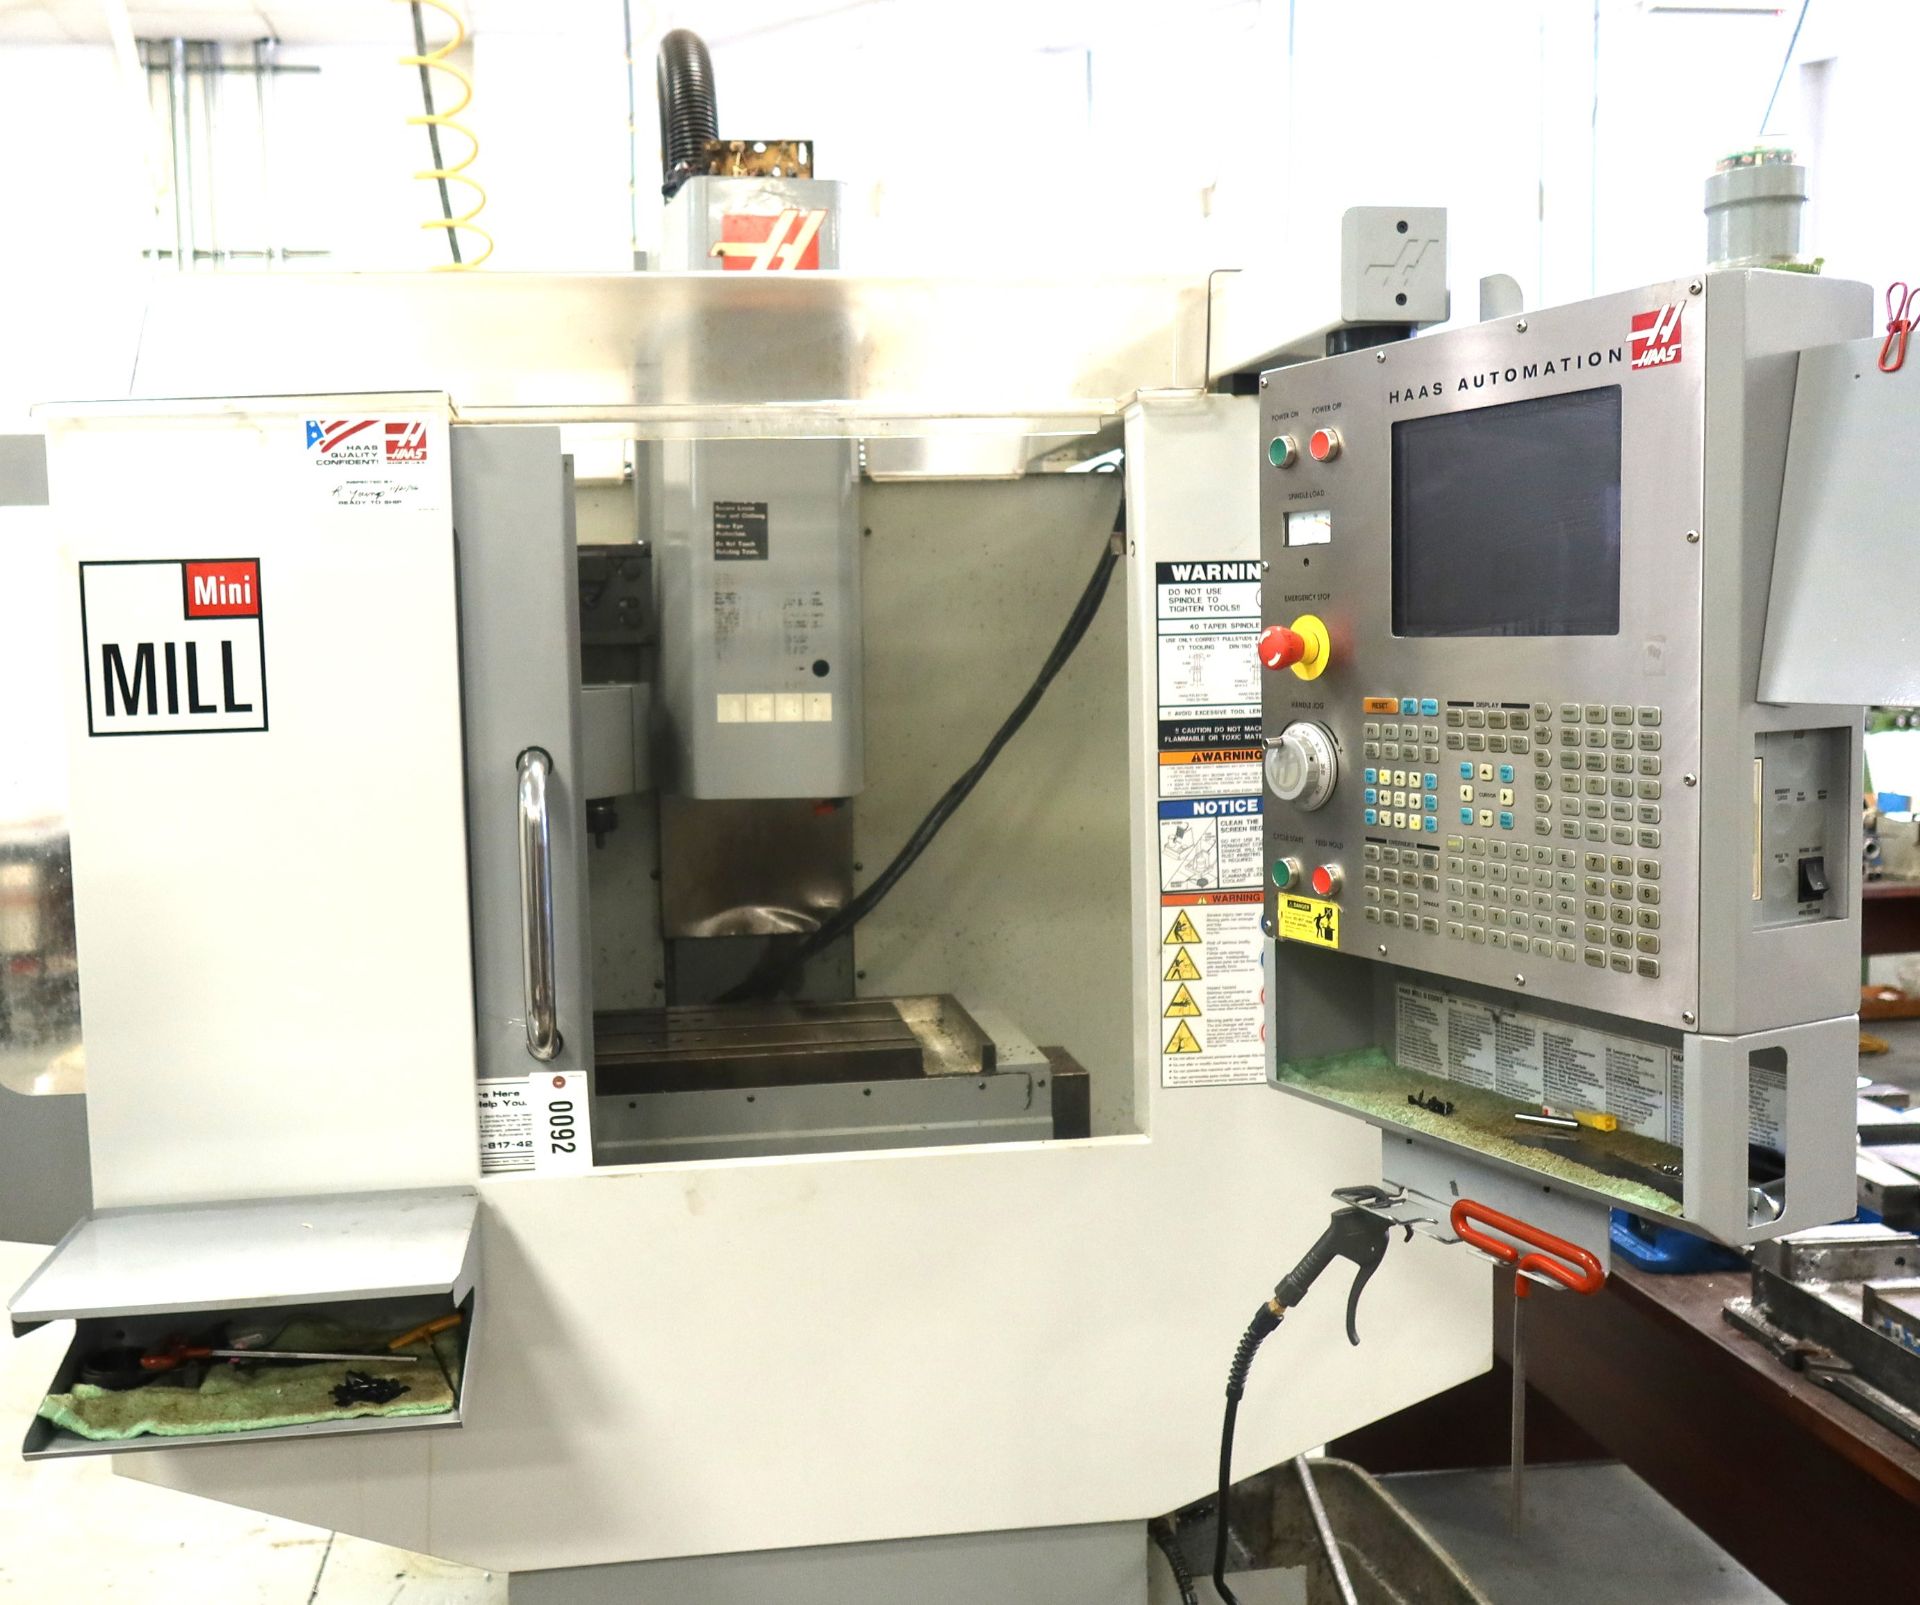 2006 Haas Mini Mill CNC 4-Axis Vertical Machining Center, SN 1053877